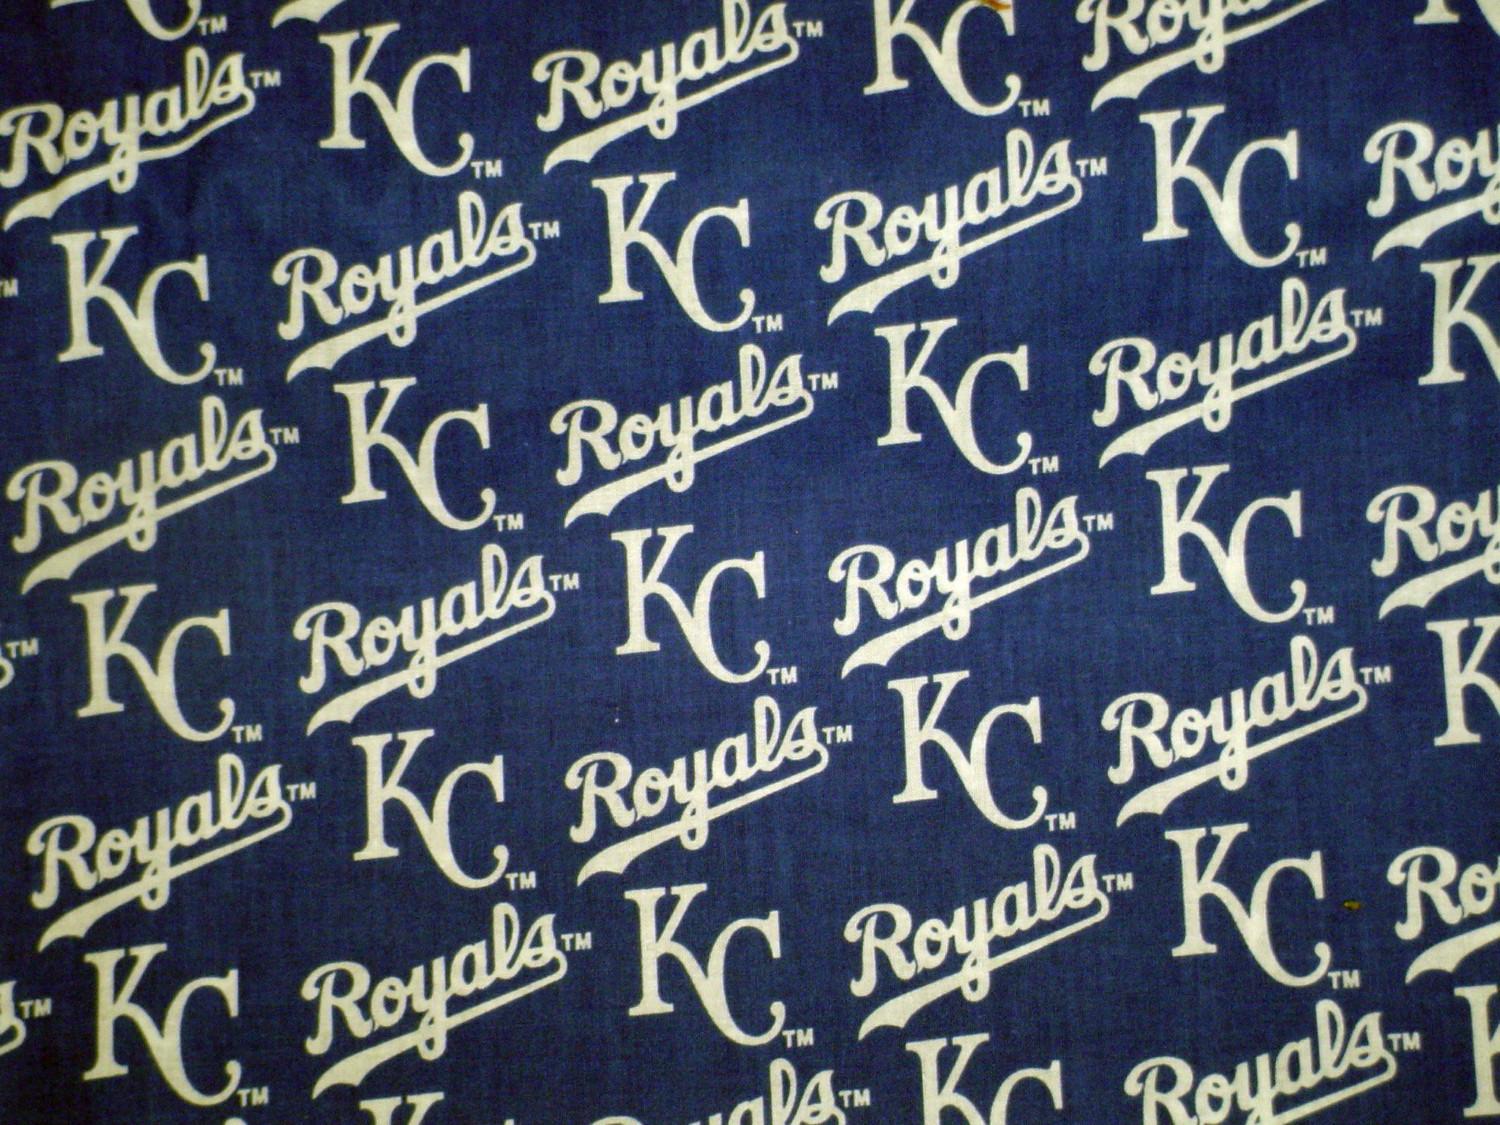 MLB BASEBALL KANSAS CITY ROYALS Cotton Fabric by HandmadeFashion 1500x1125